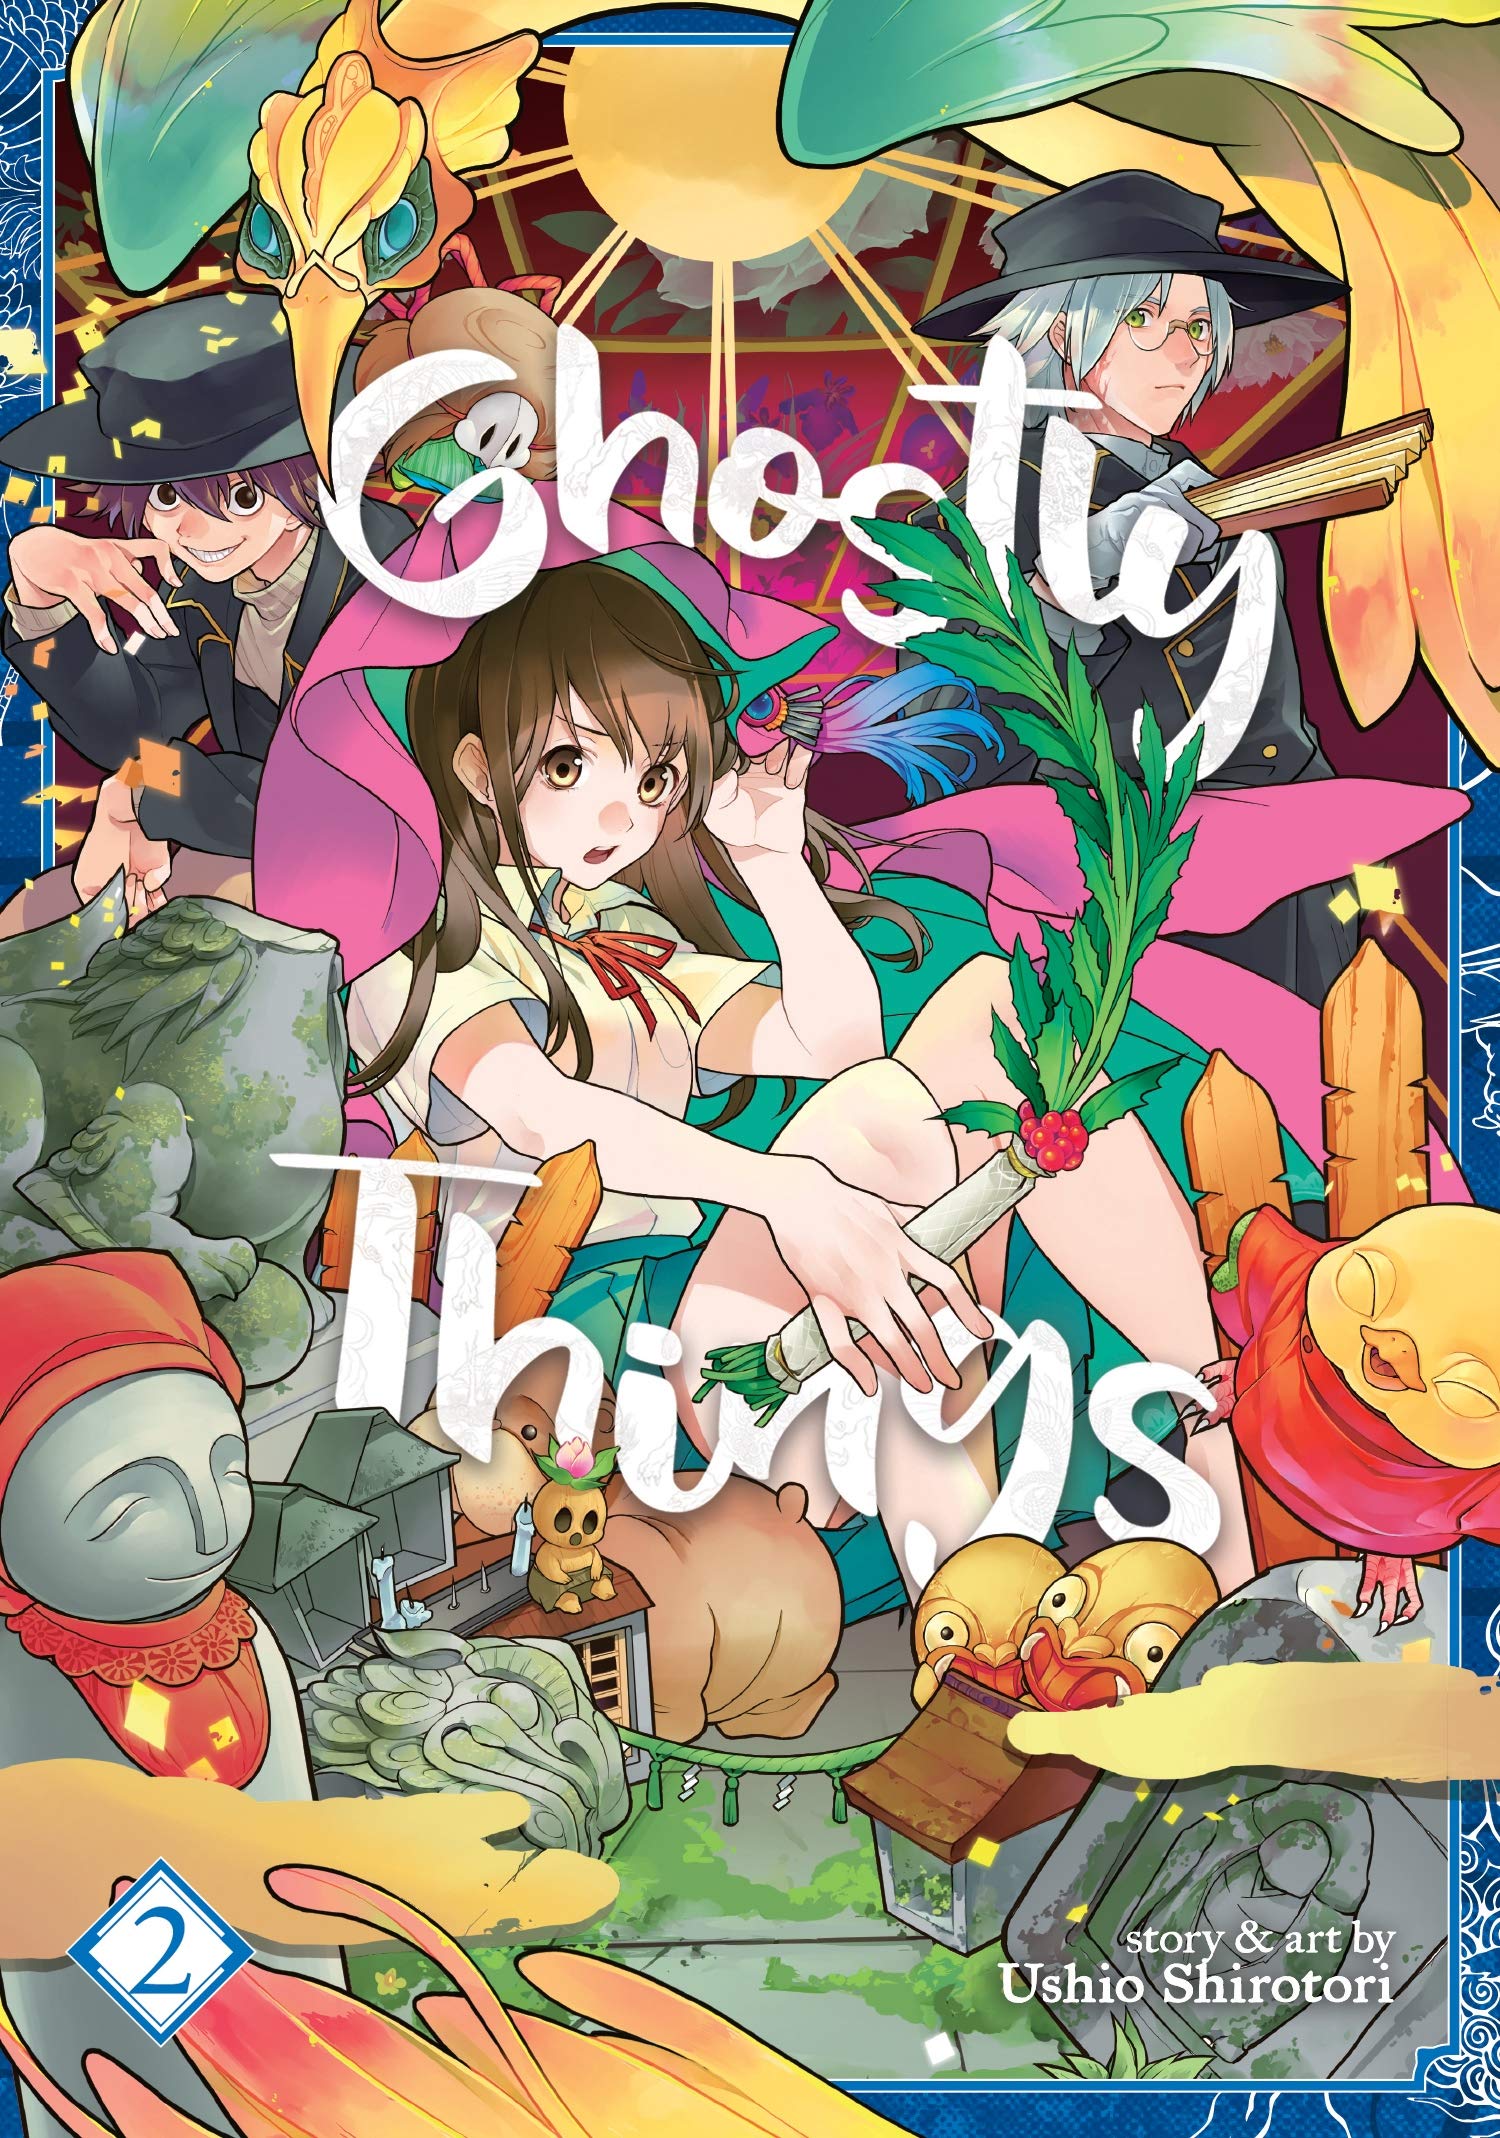 Vezi detalii pentru Ghostly Things - Volume 2 | Ushio Shirotori